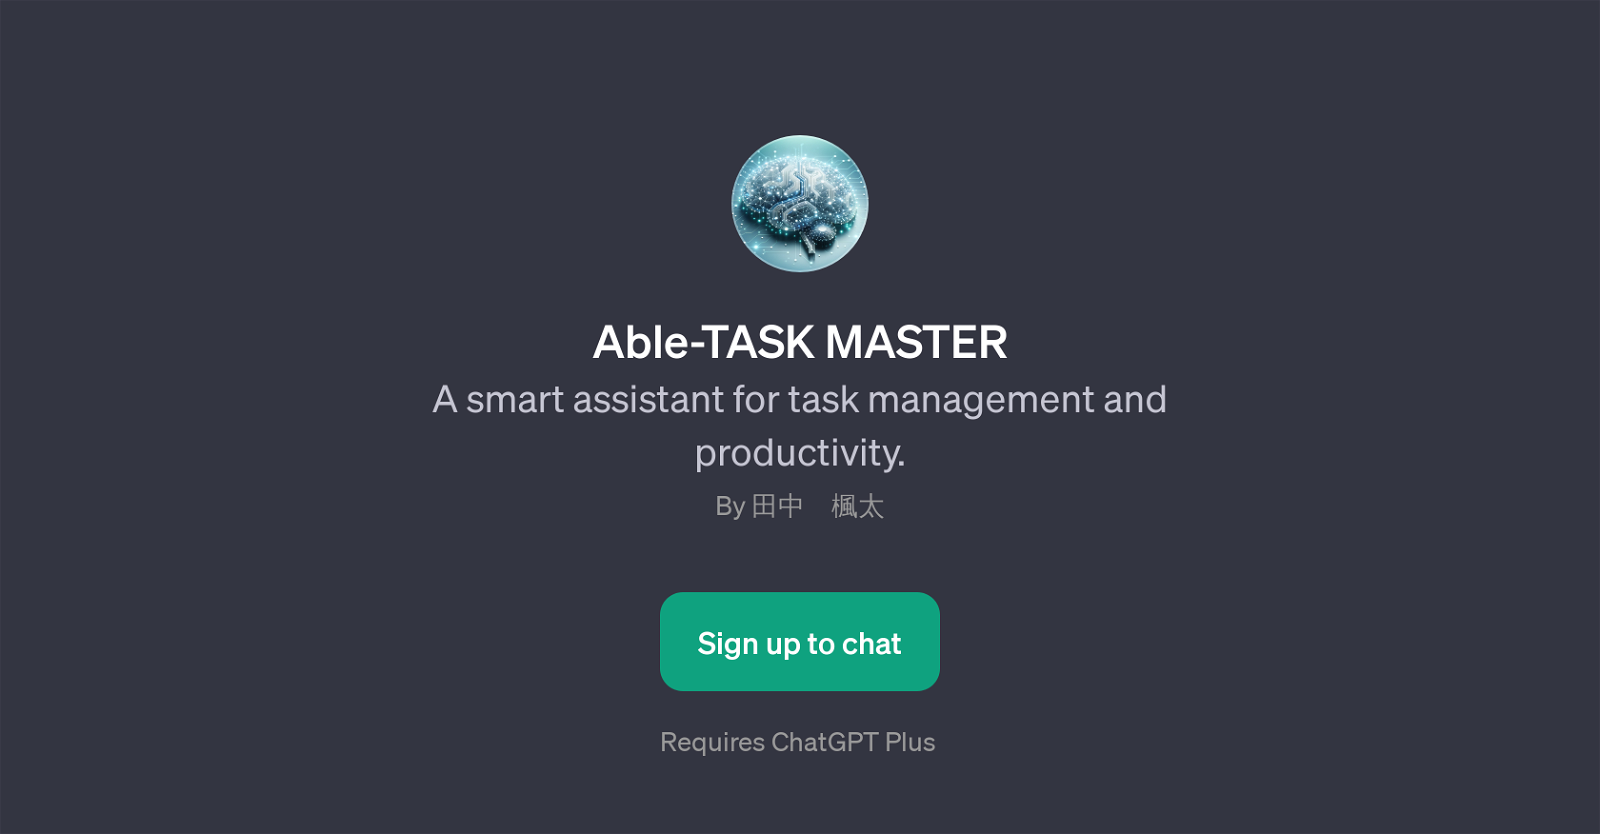 Able-TASK MASTER website